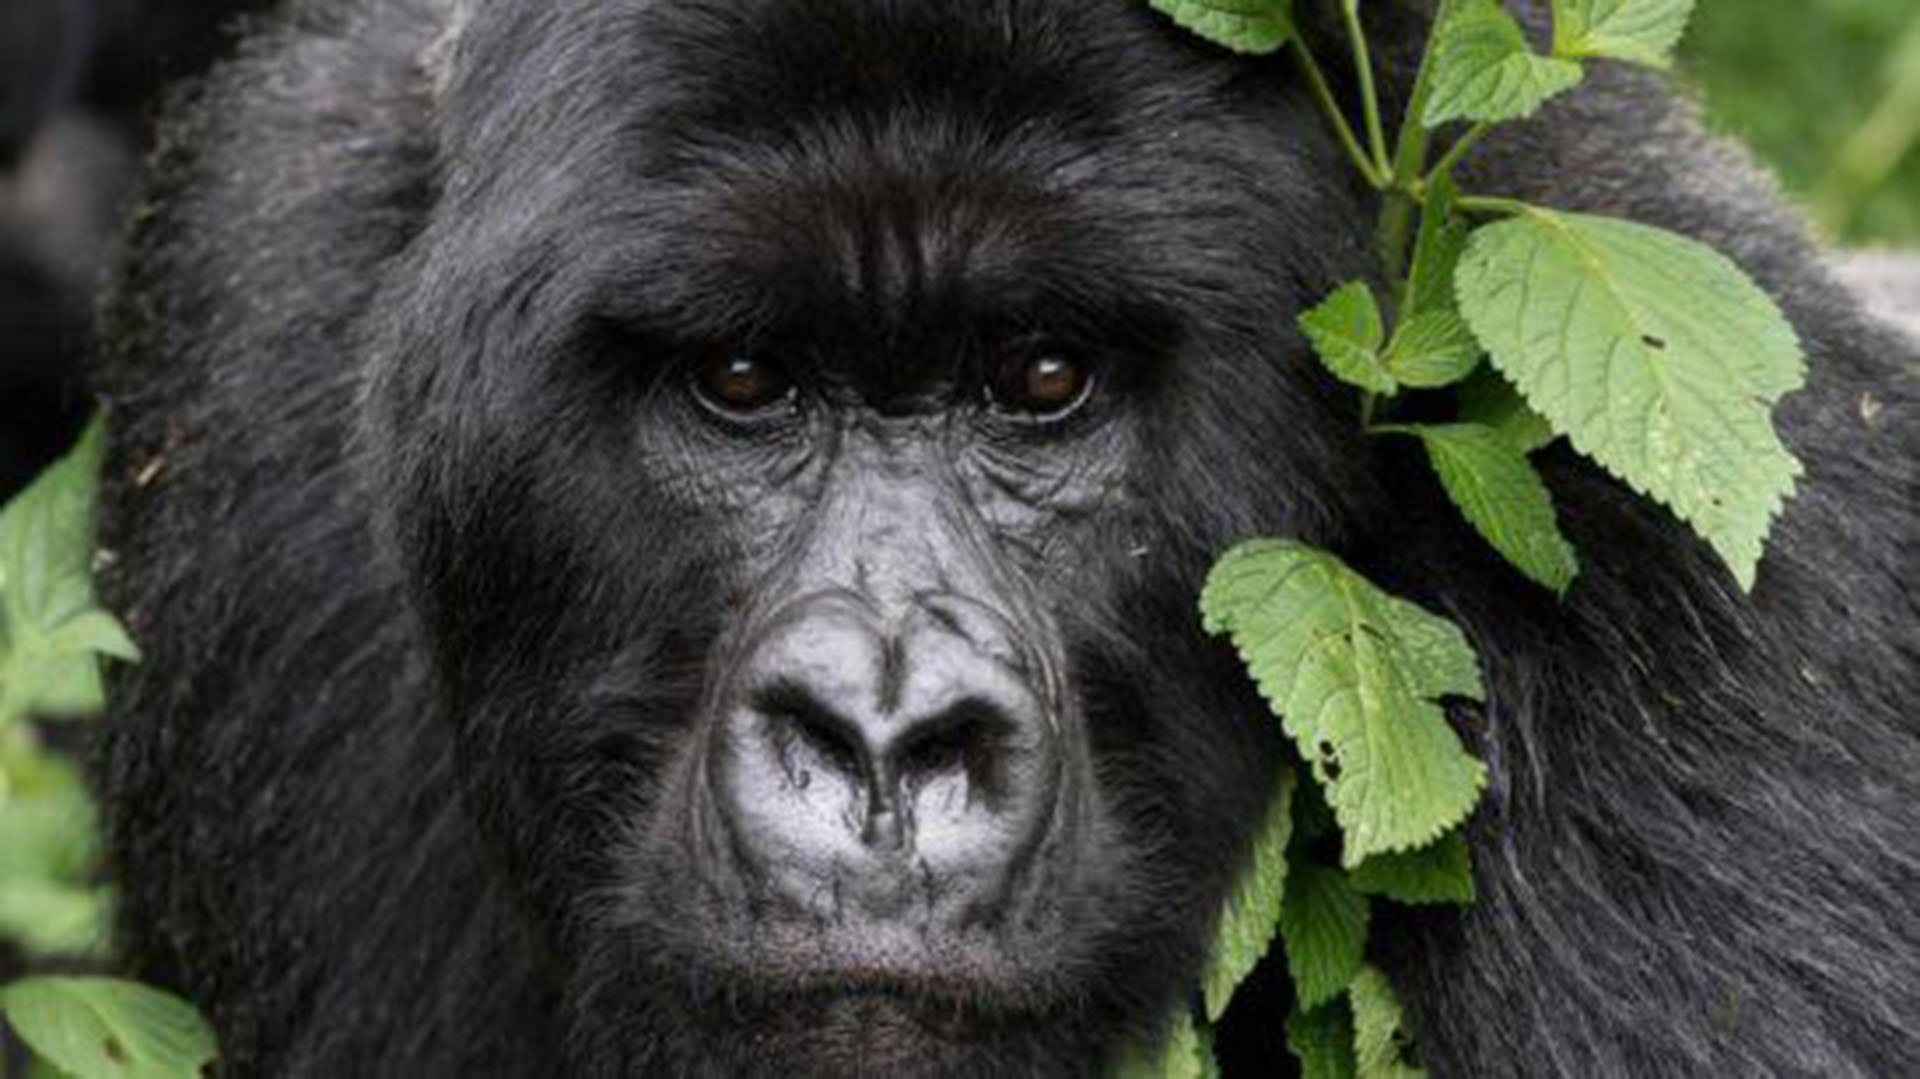 Mountain gorilla ape close-up portrait